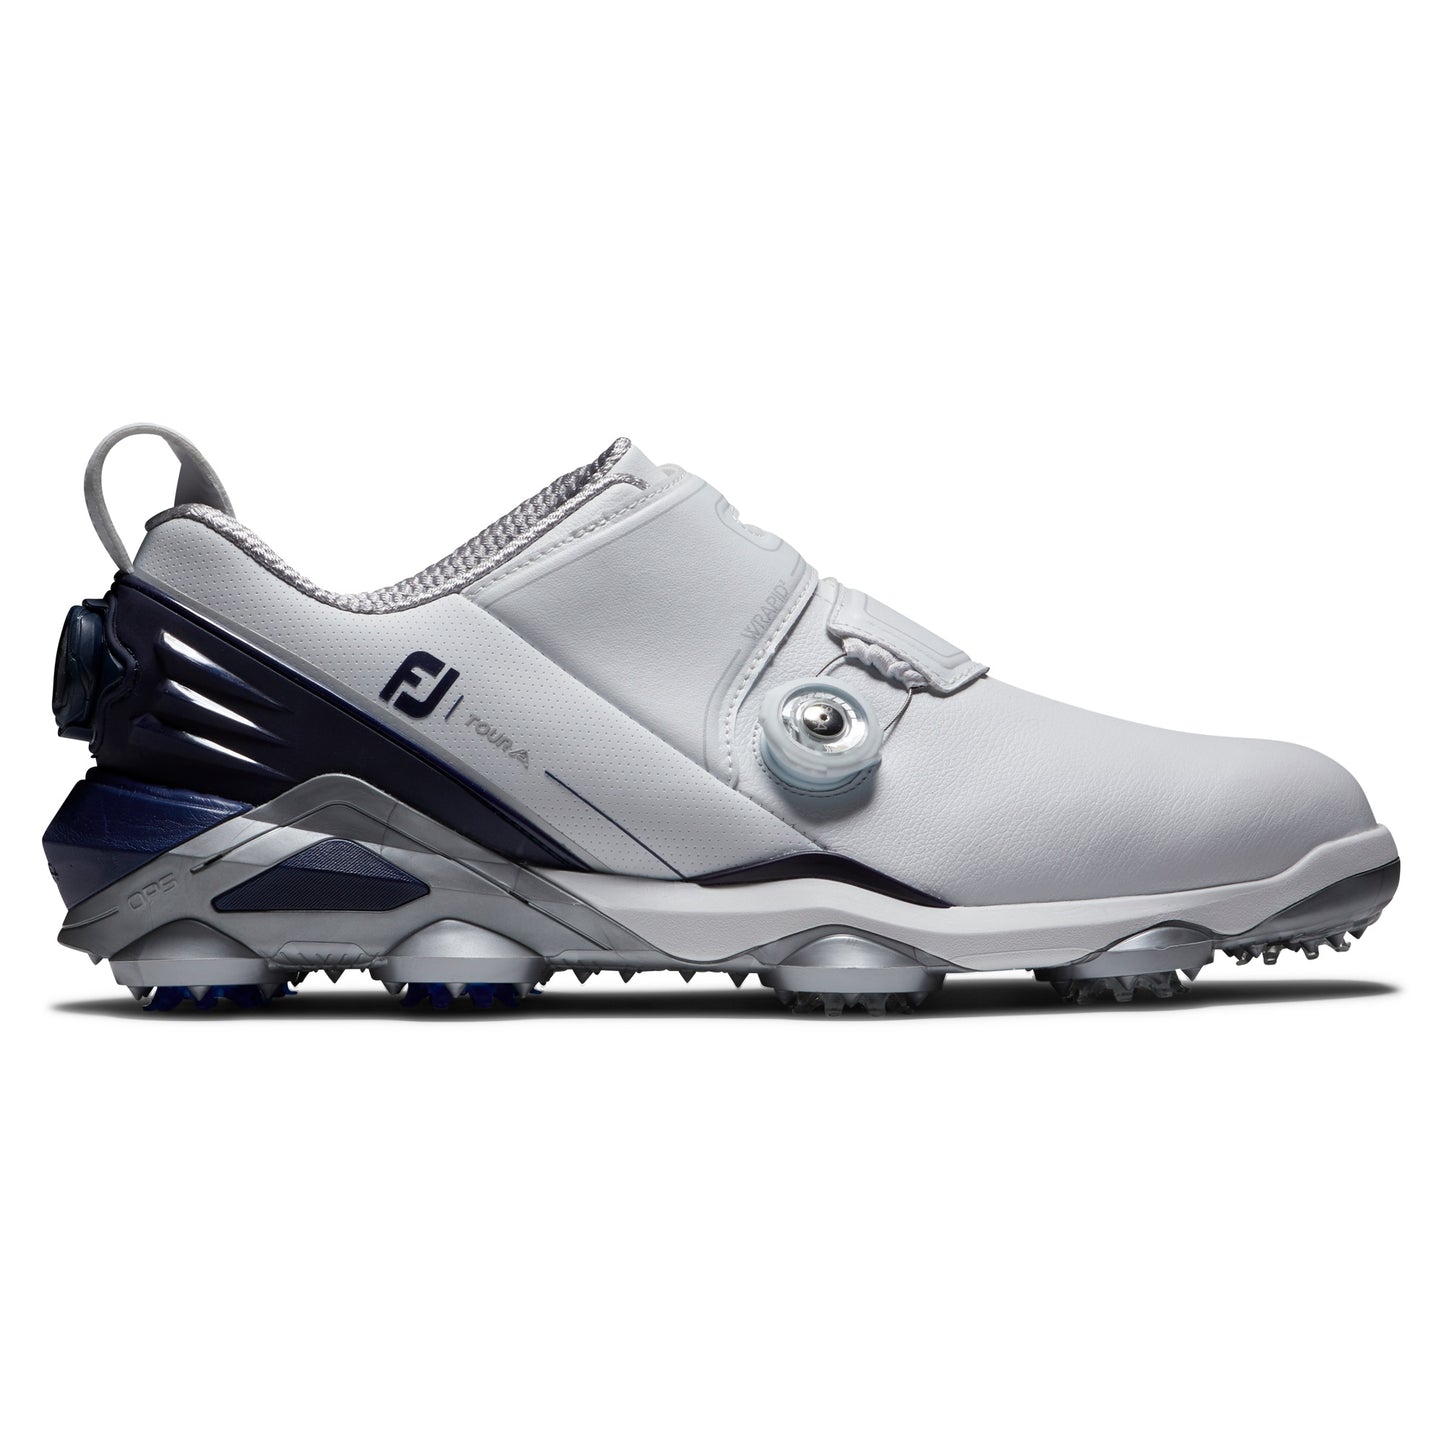 FootJoy Tour Alpha Dual BOA Mens Golf Shoes White/Grey/Navy 55508 (Previous Season Style)